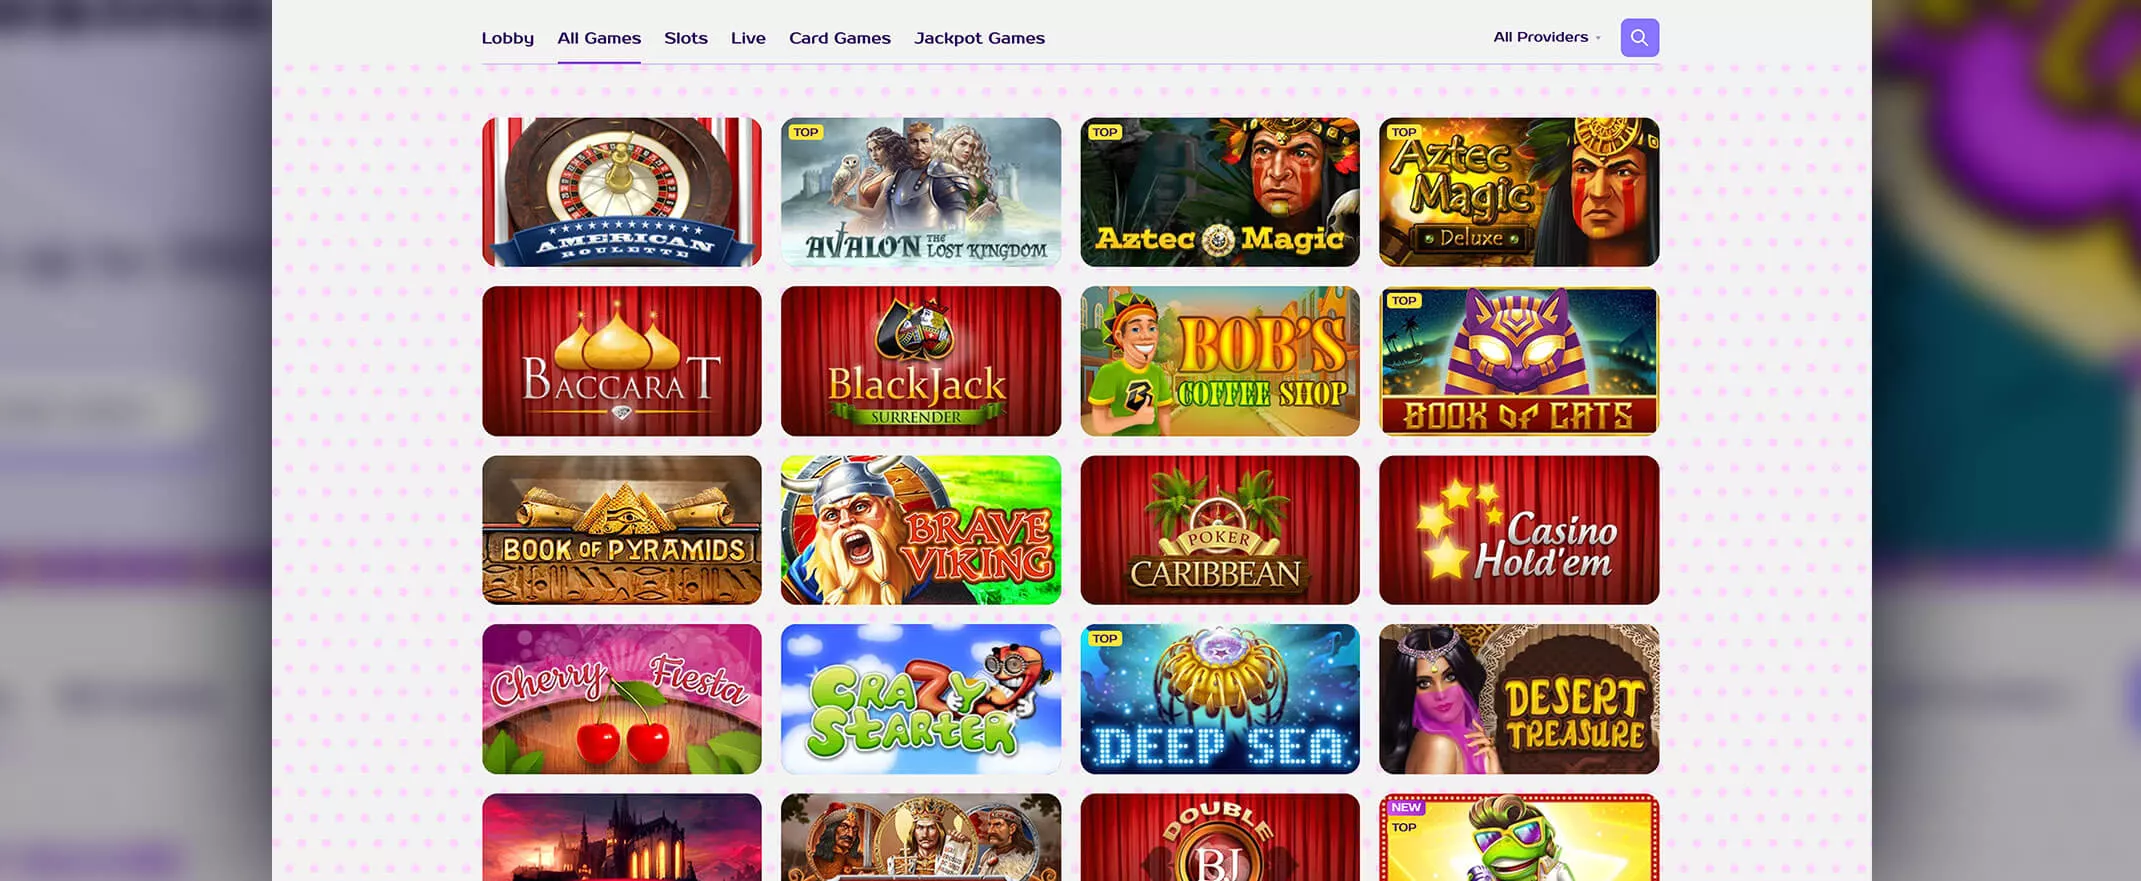 Kim Vegas casino screenshot of the games